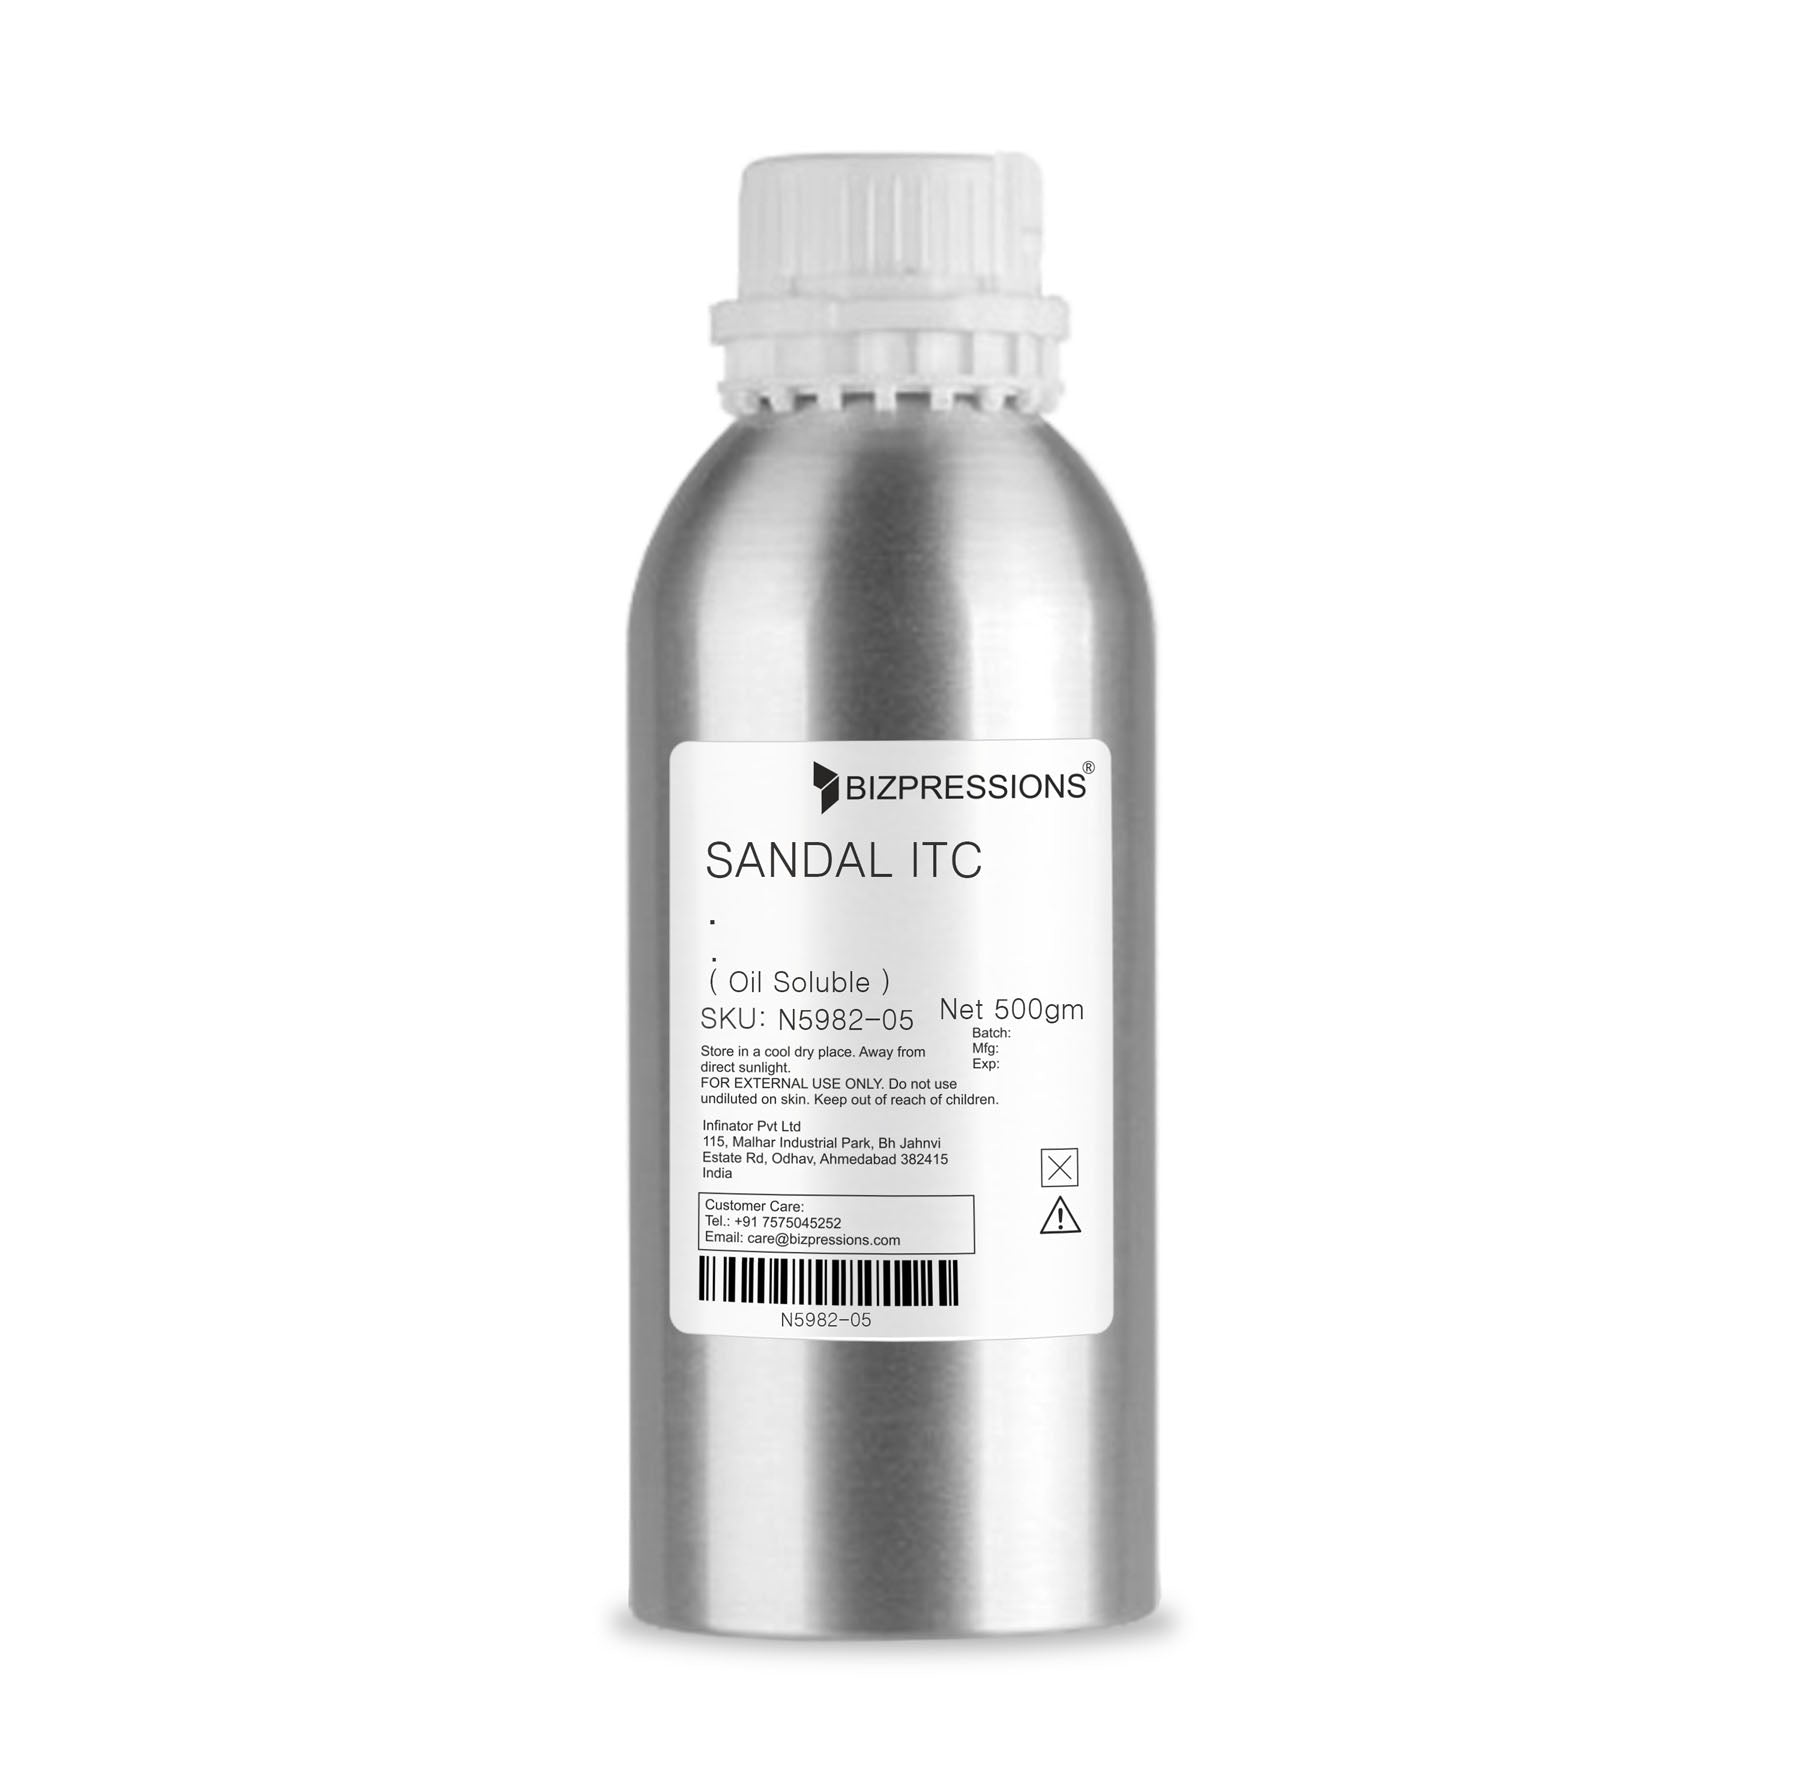 SANDAL ITC - Fragrance ( Oil Soluble ) - 500 gm